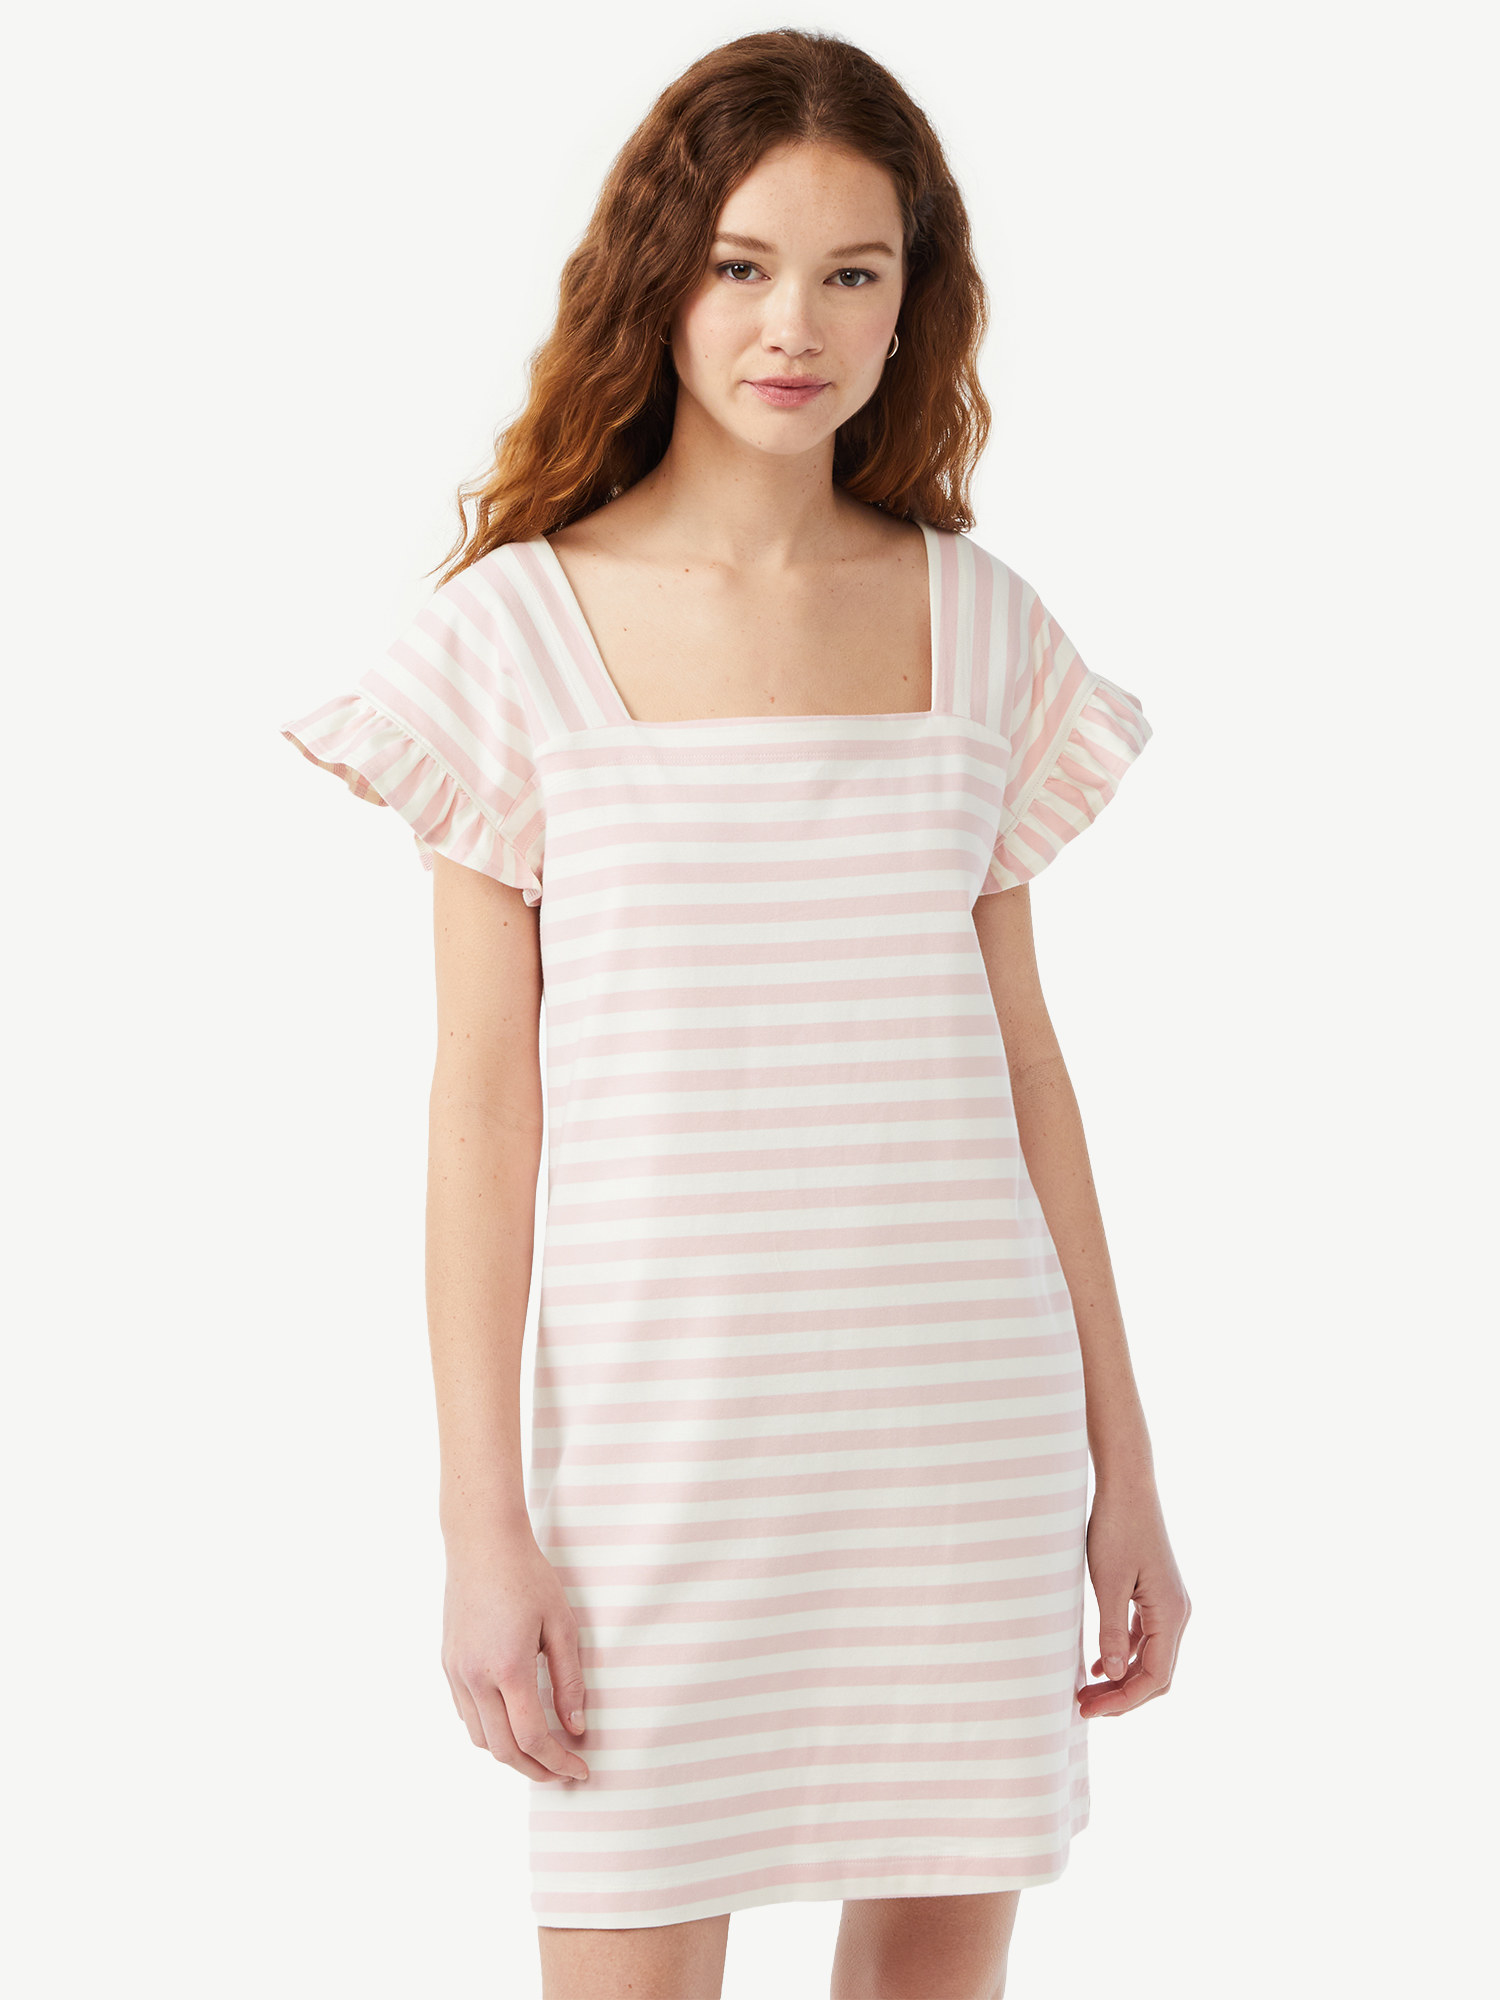 Model wearing the bengal stripe silver pink dress